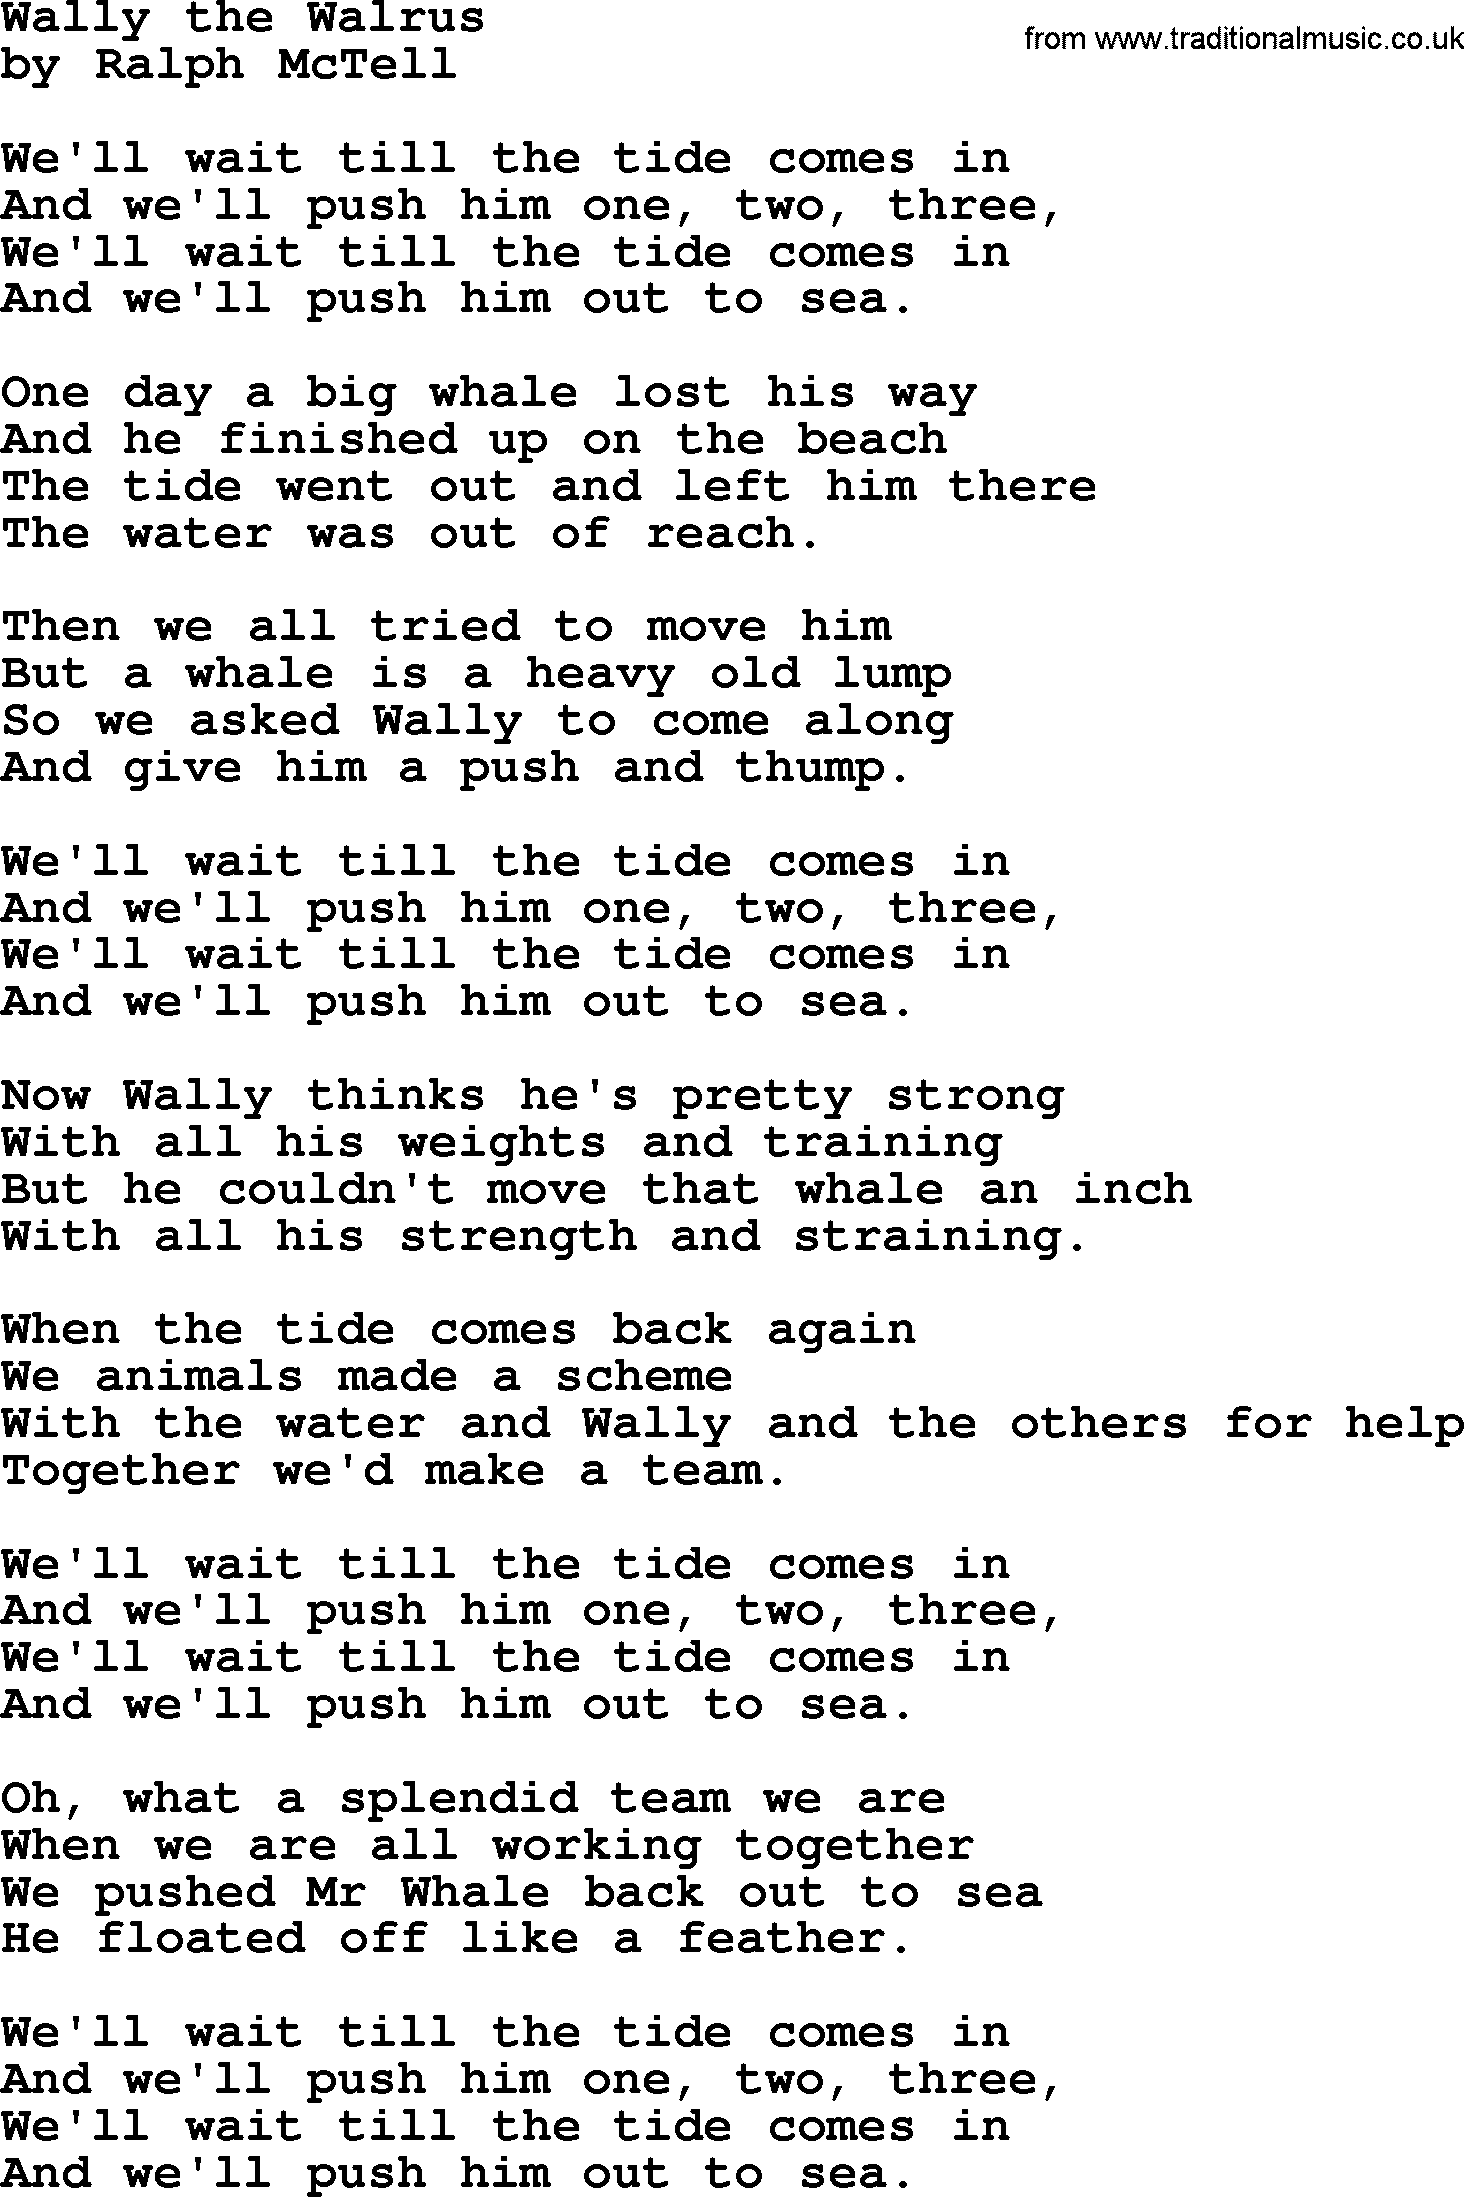 Ralph McTell Song: Wally The Walrus, lyrics